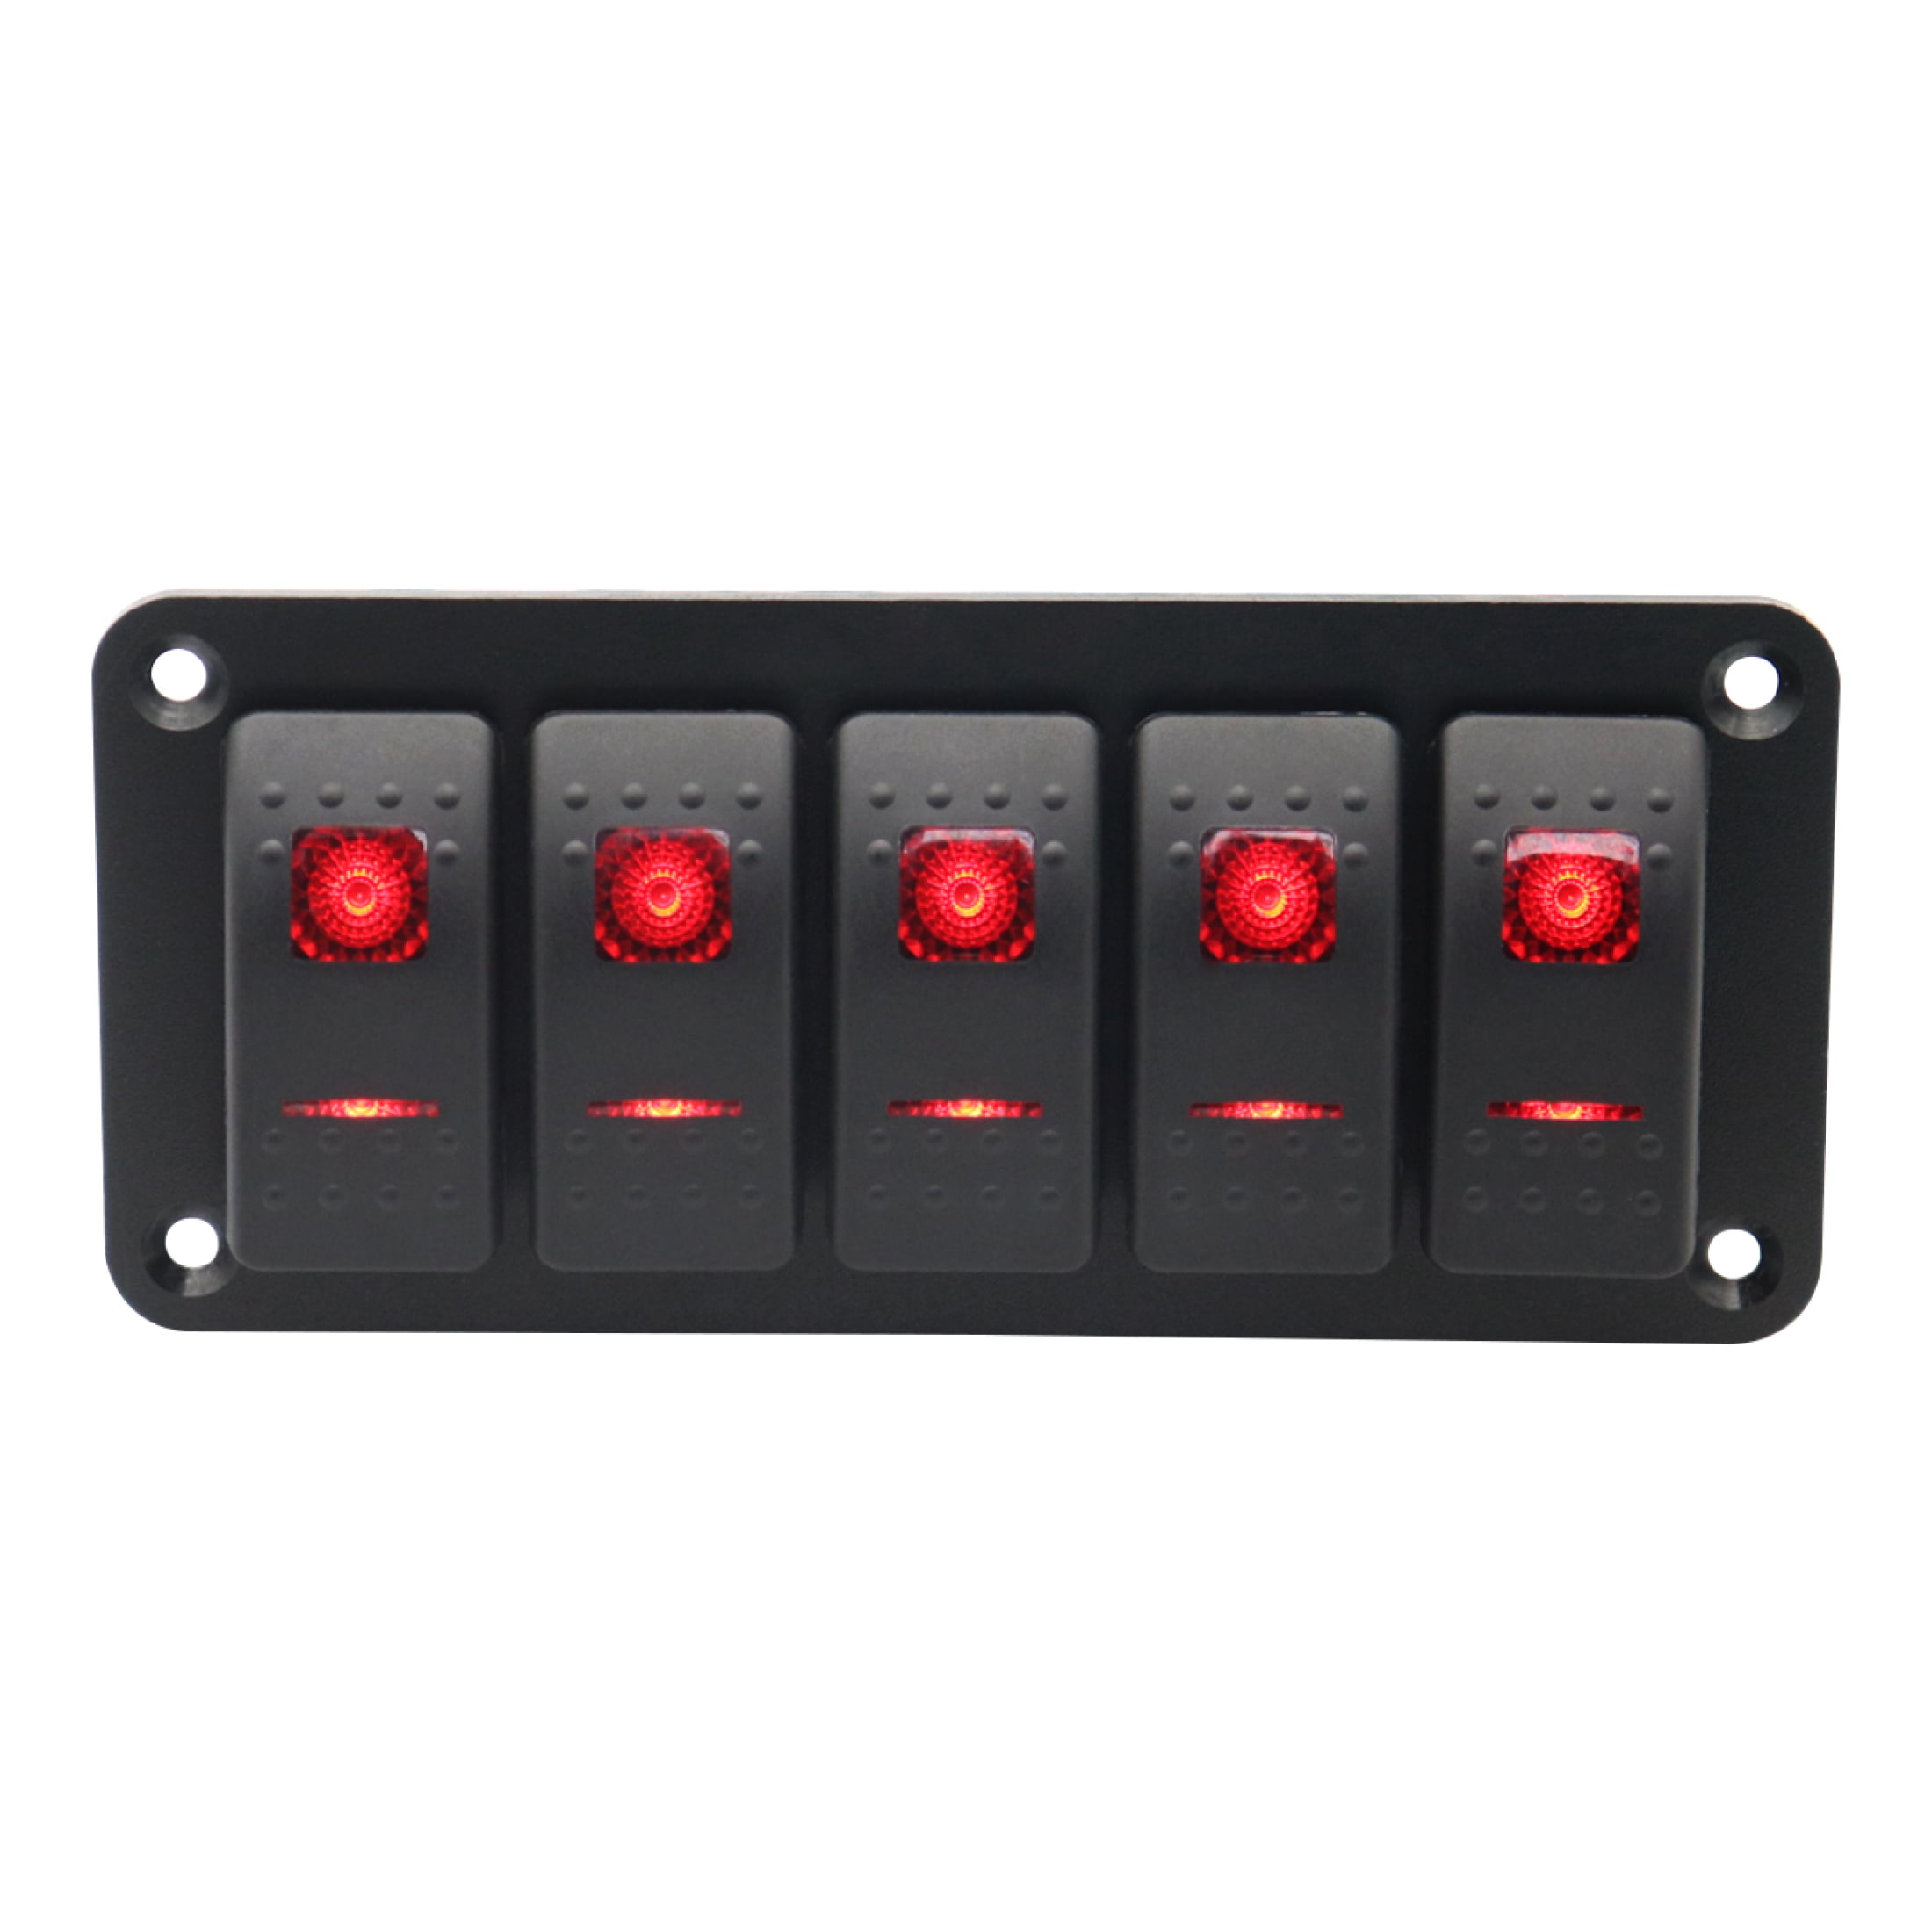 EUBUY 4 Gang 12V/24V Rocker Switch with Red LED Light Waterproof Rocker  Switch Panel for Car Marine Car Boat Vehicles Truck 